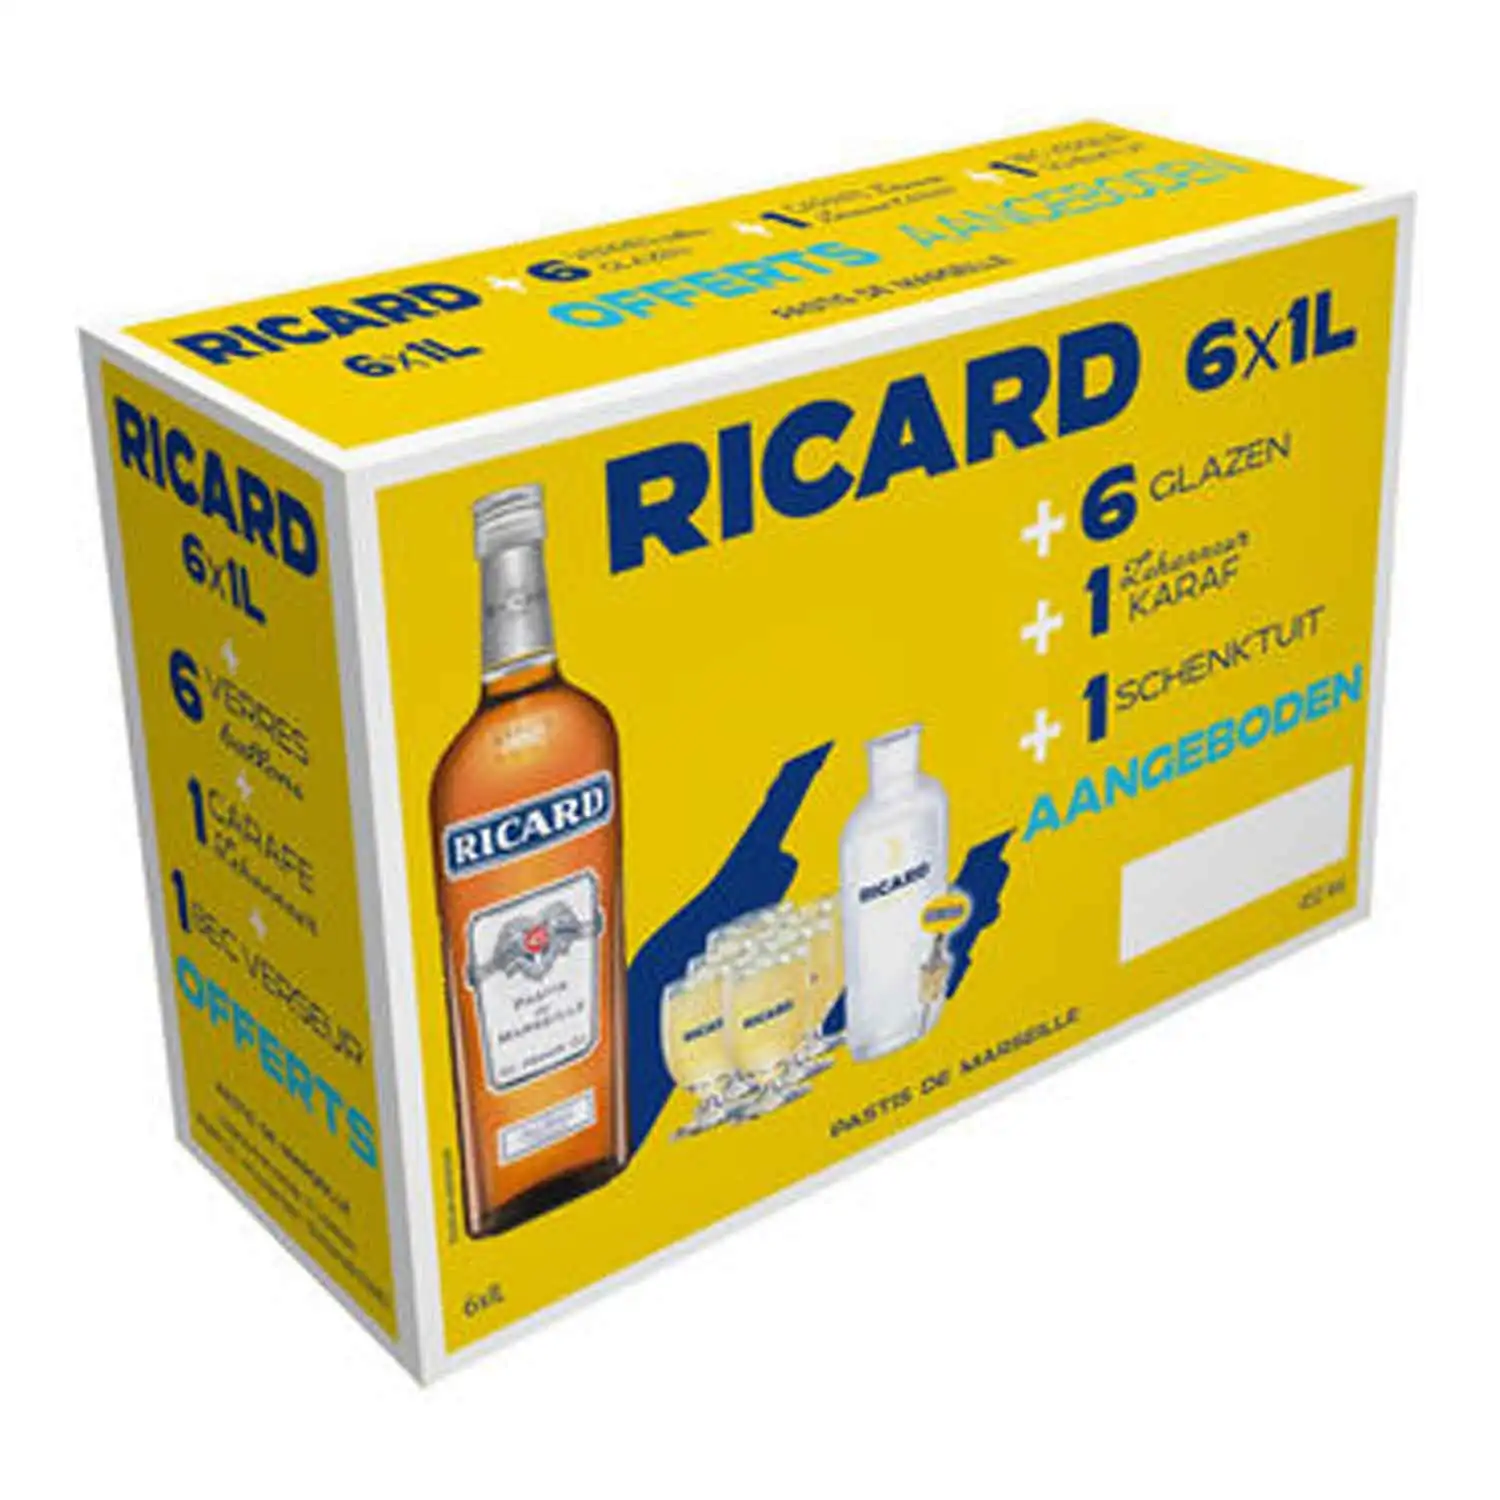 Ricard 6x1l +6 glass+1 carafe+1 drip - Buy at Real Tobacco